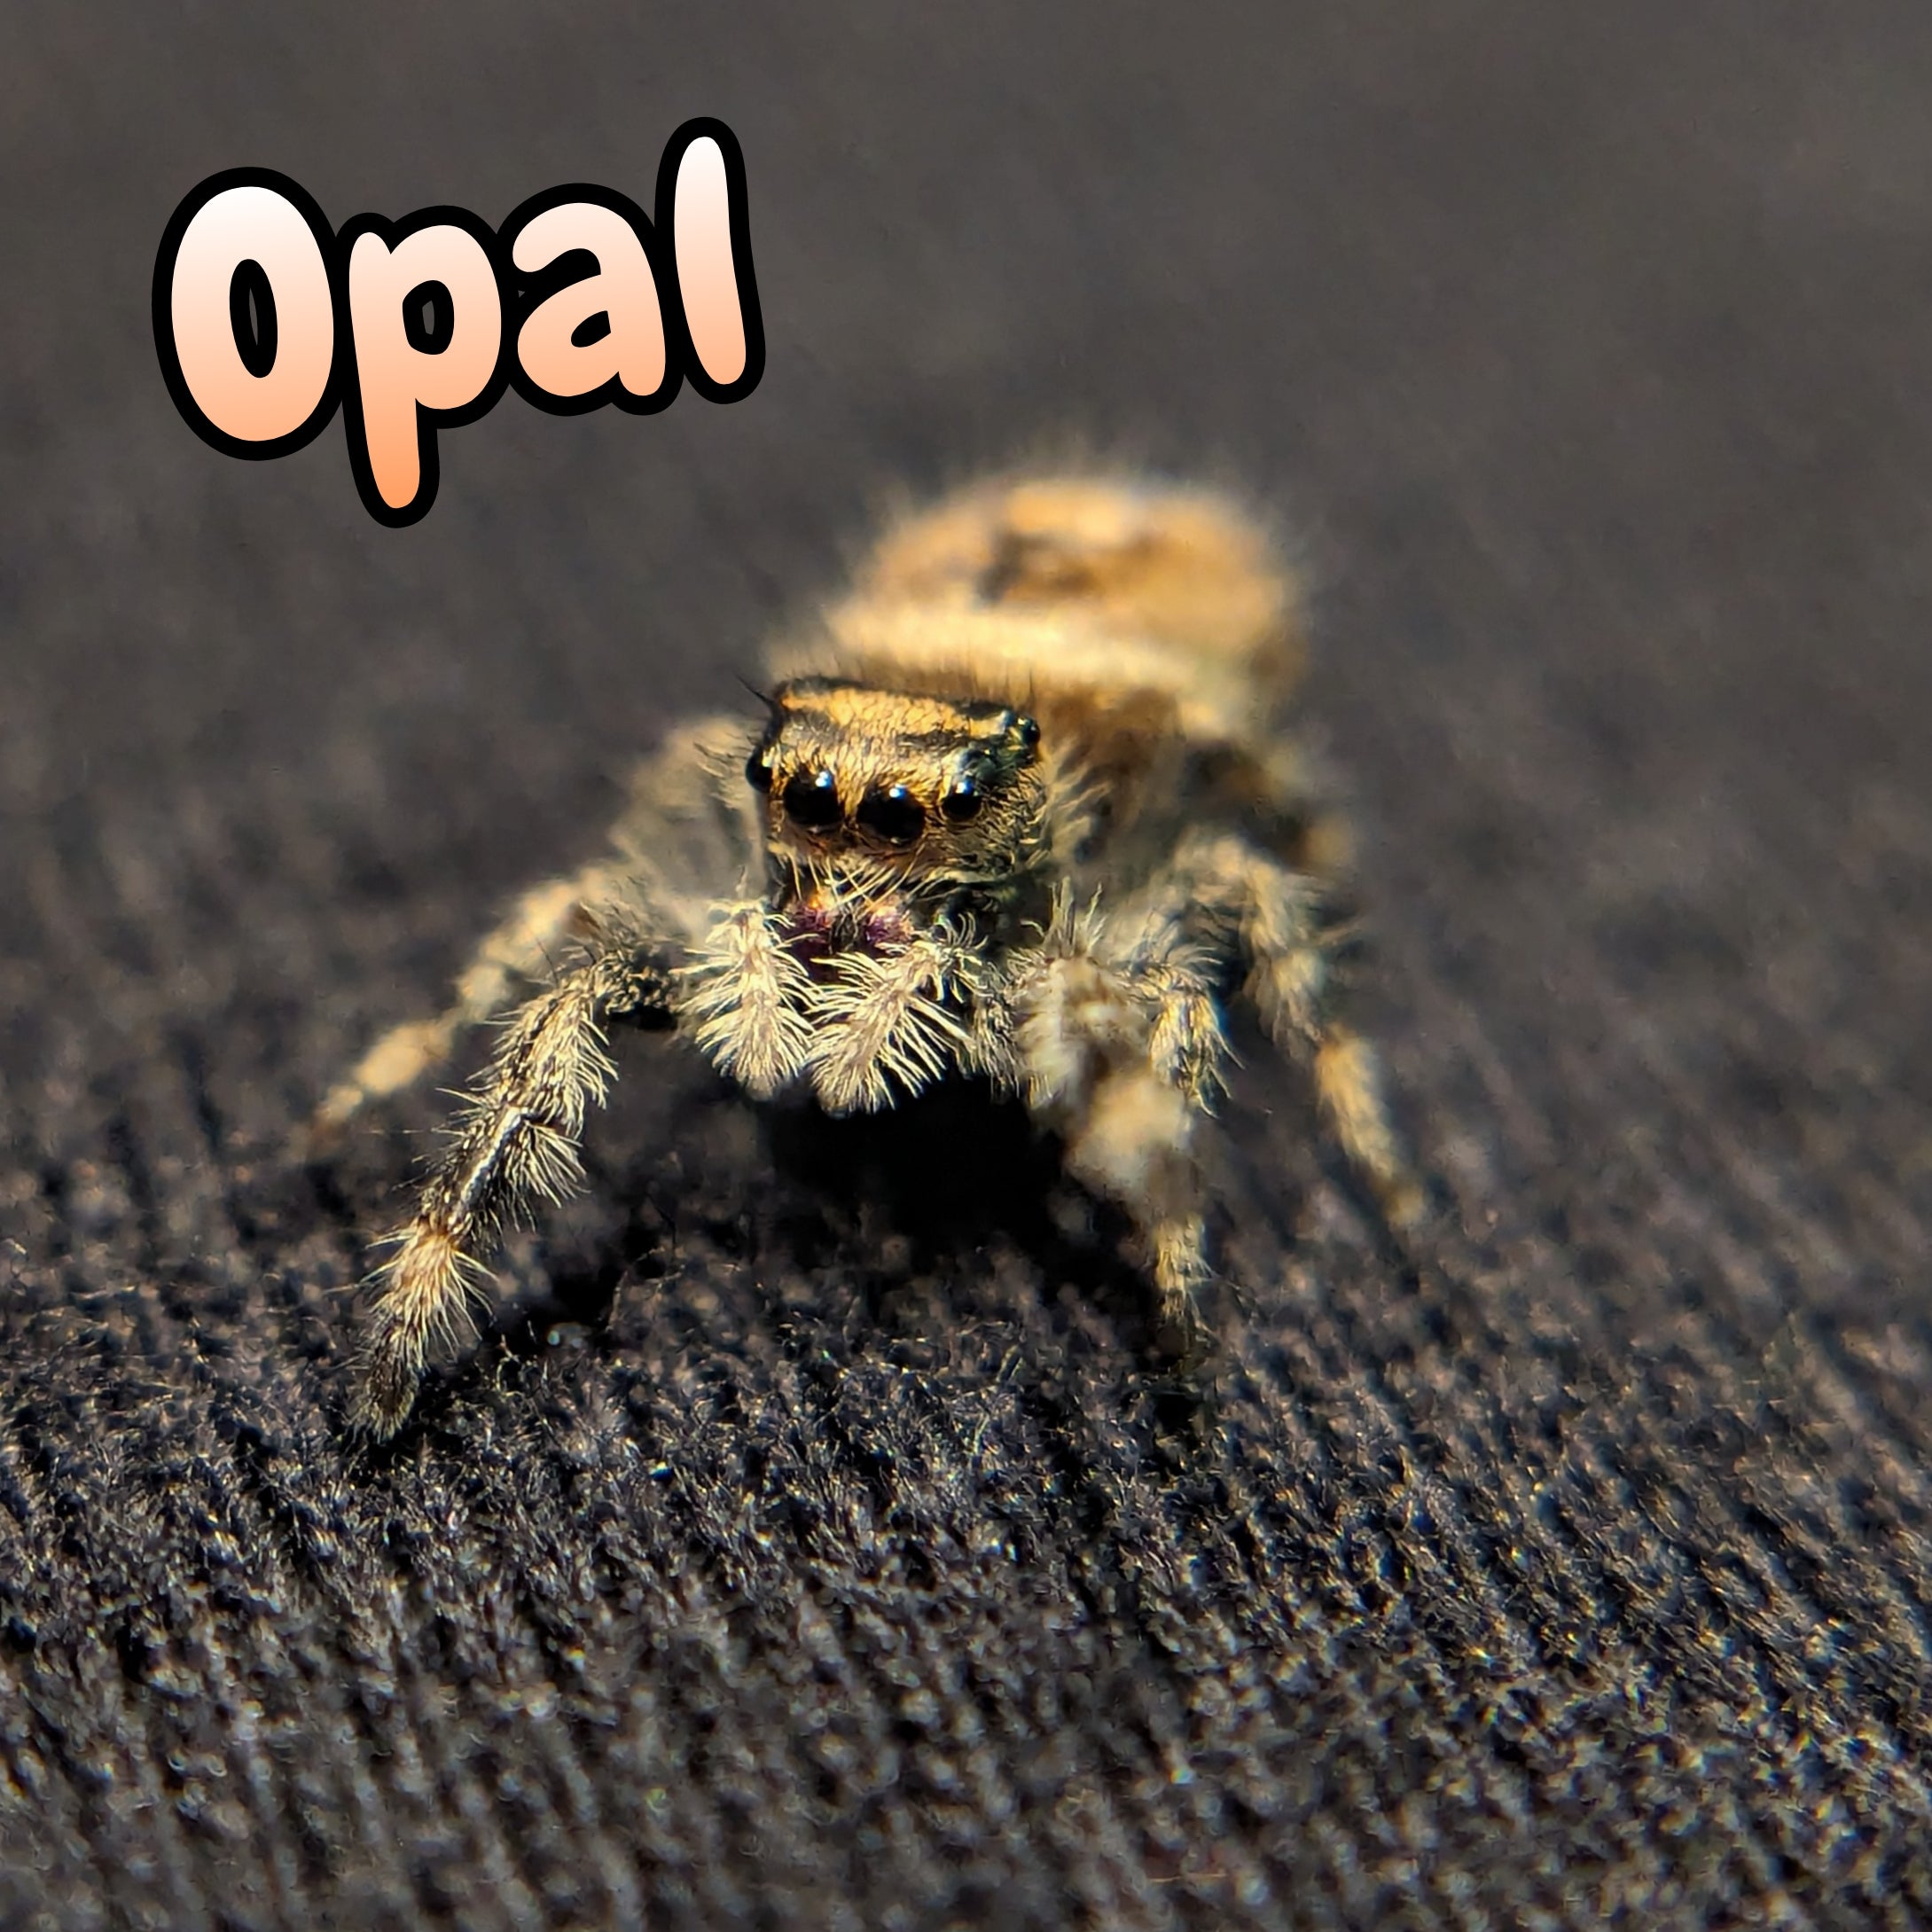 Regal Jumping Spider "Opal"